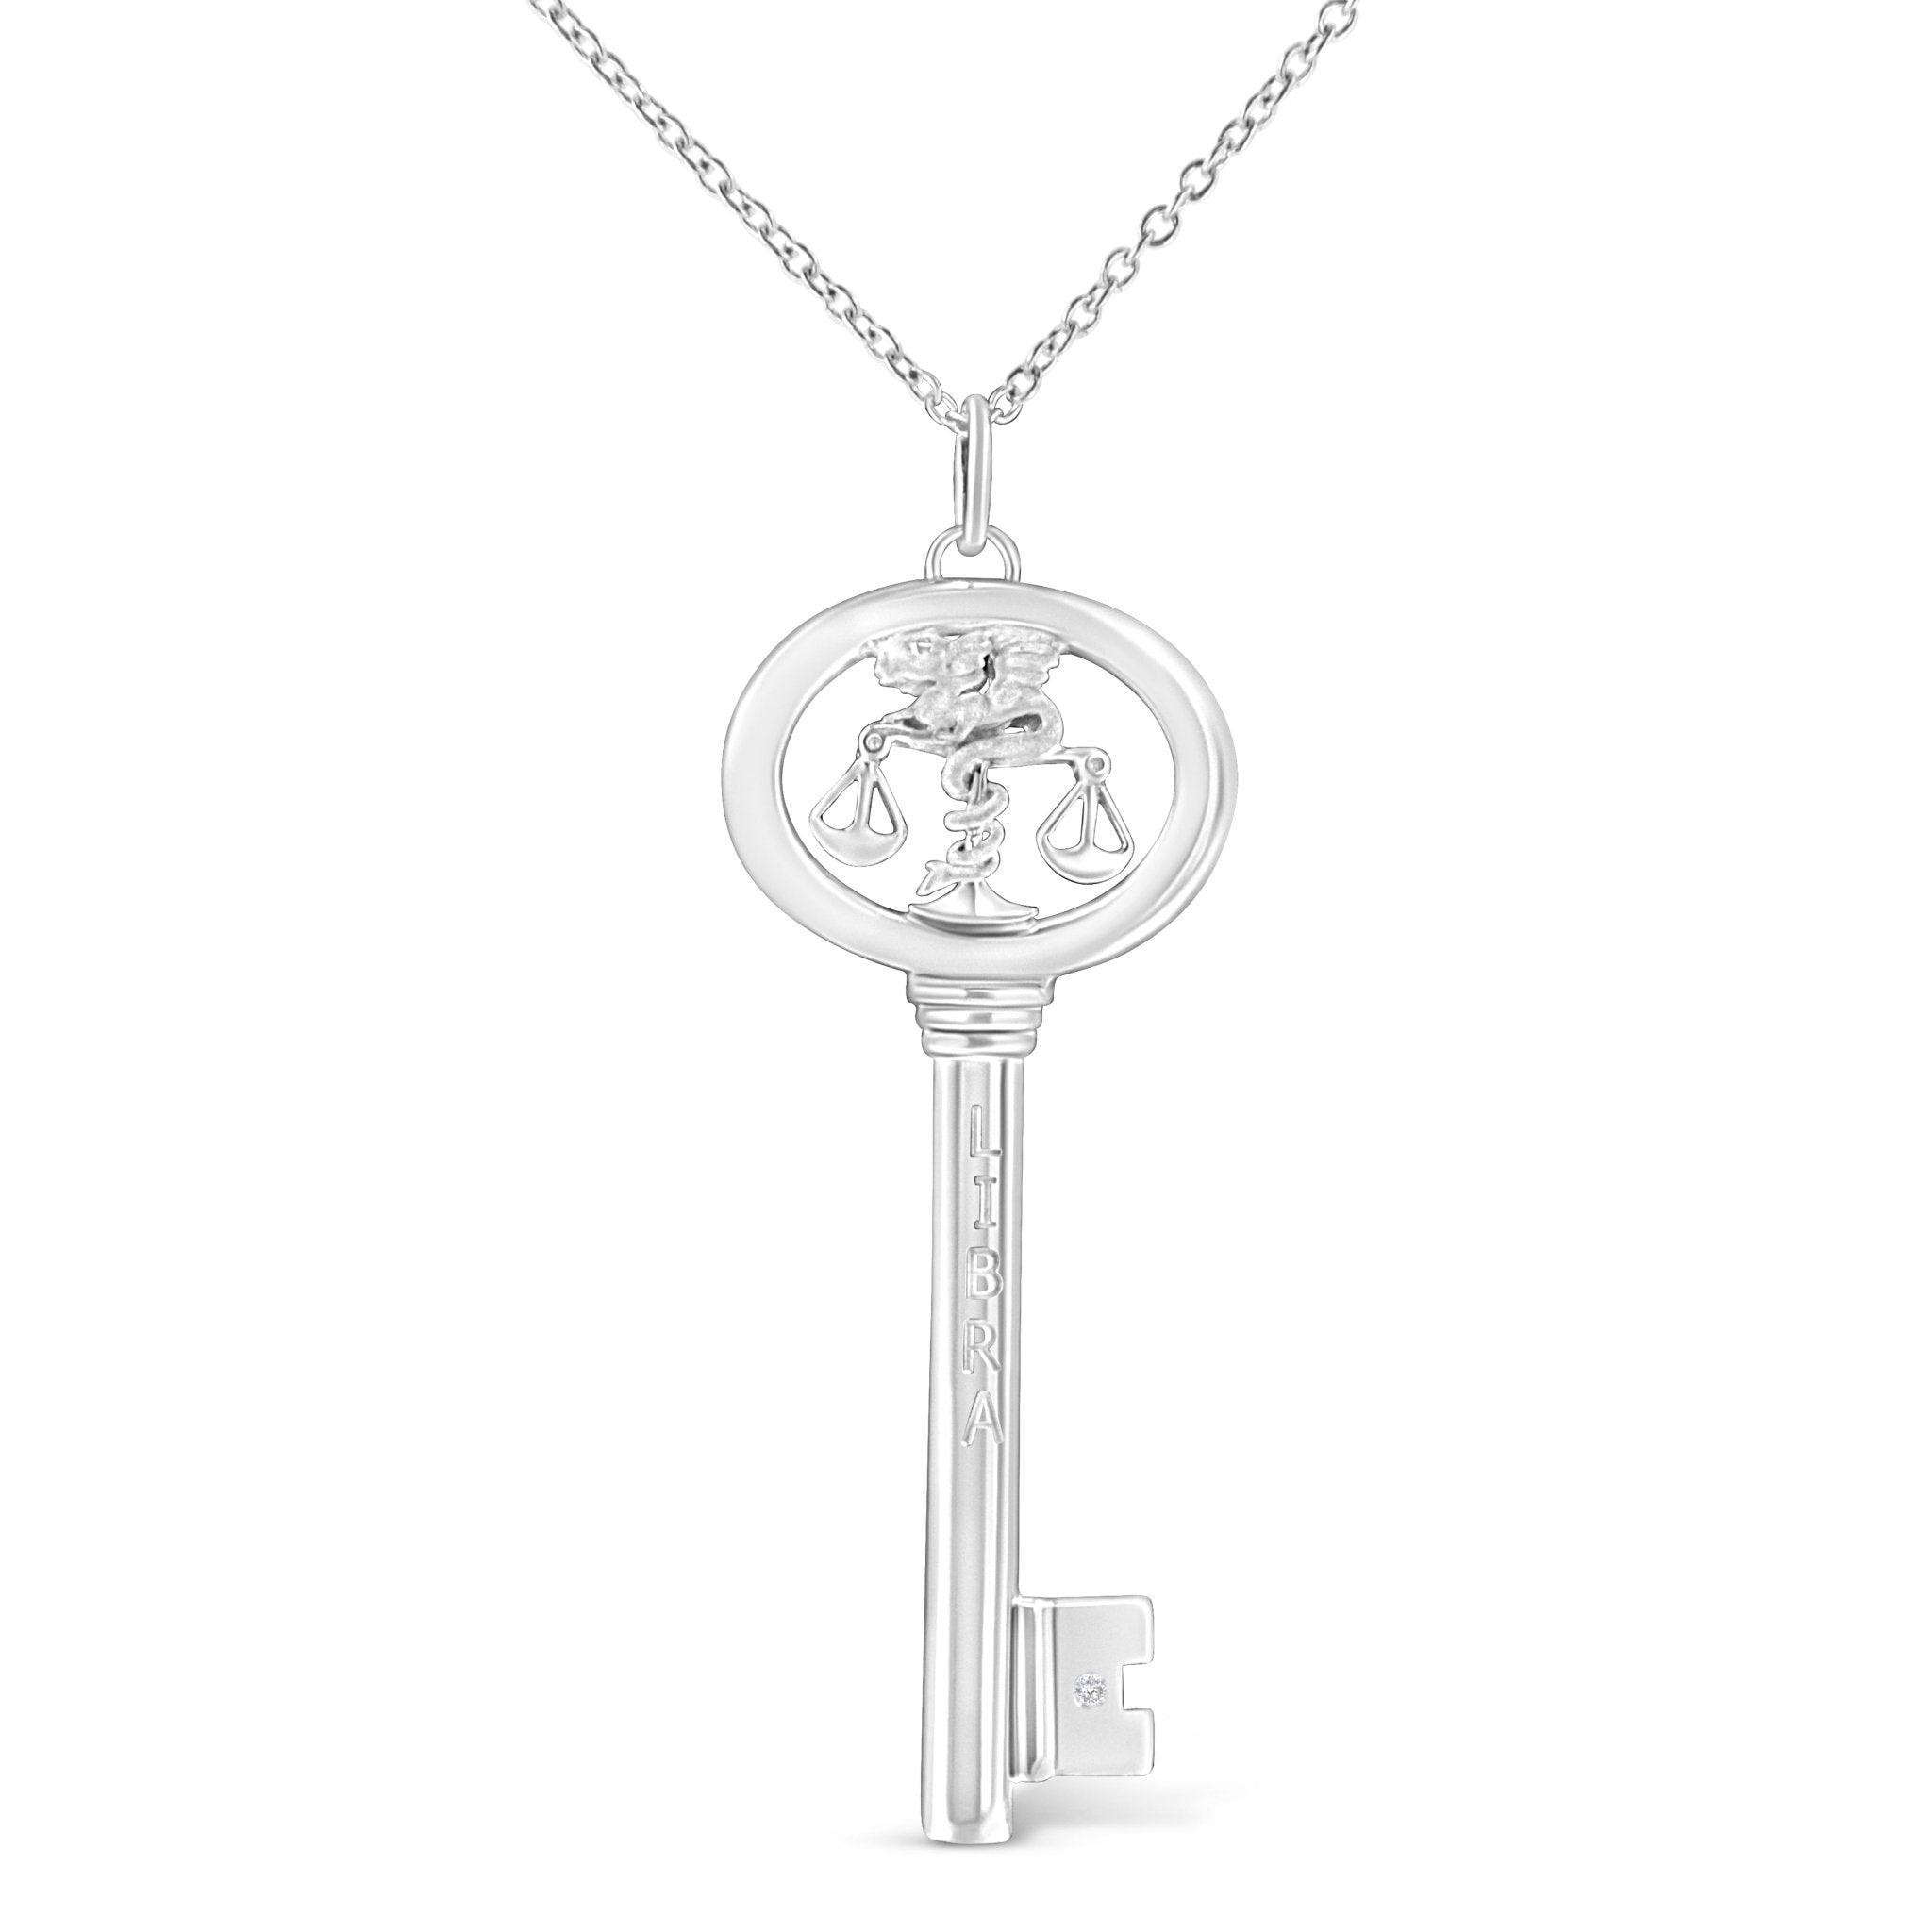 .925 Sterling Silver Diamond Accent Libra Zodiac Key 18" Pendant Necklace (K-L Color, I1-I2 Clarity) - Tuesday Morning-Pendant Necklace